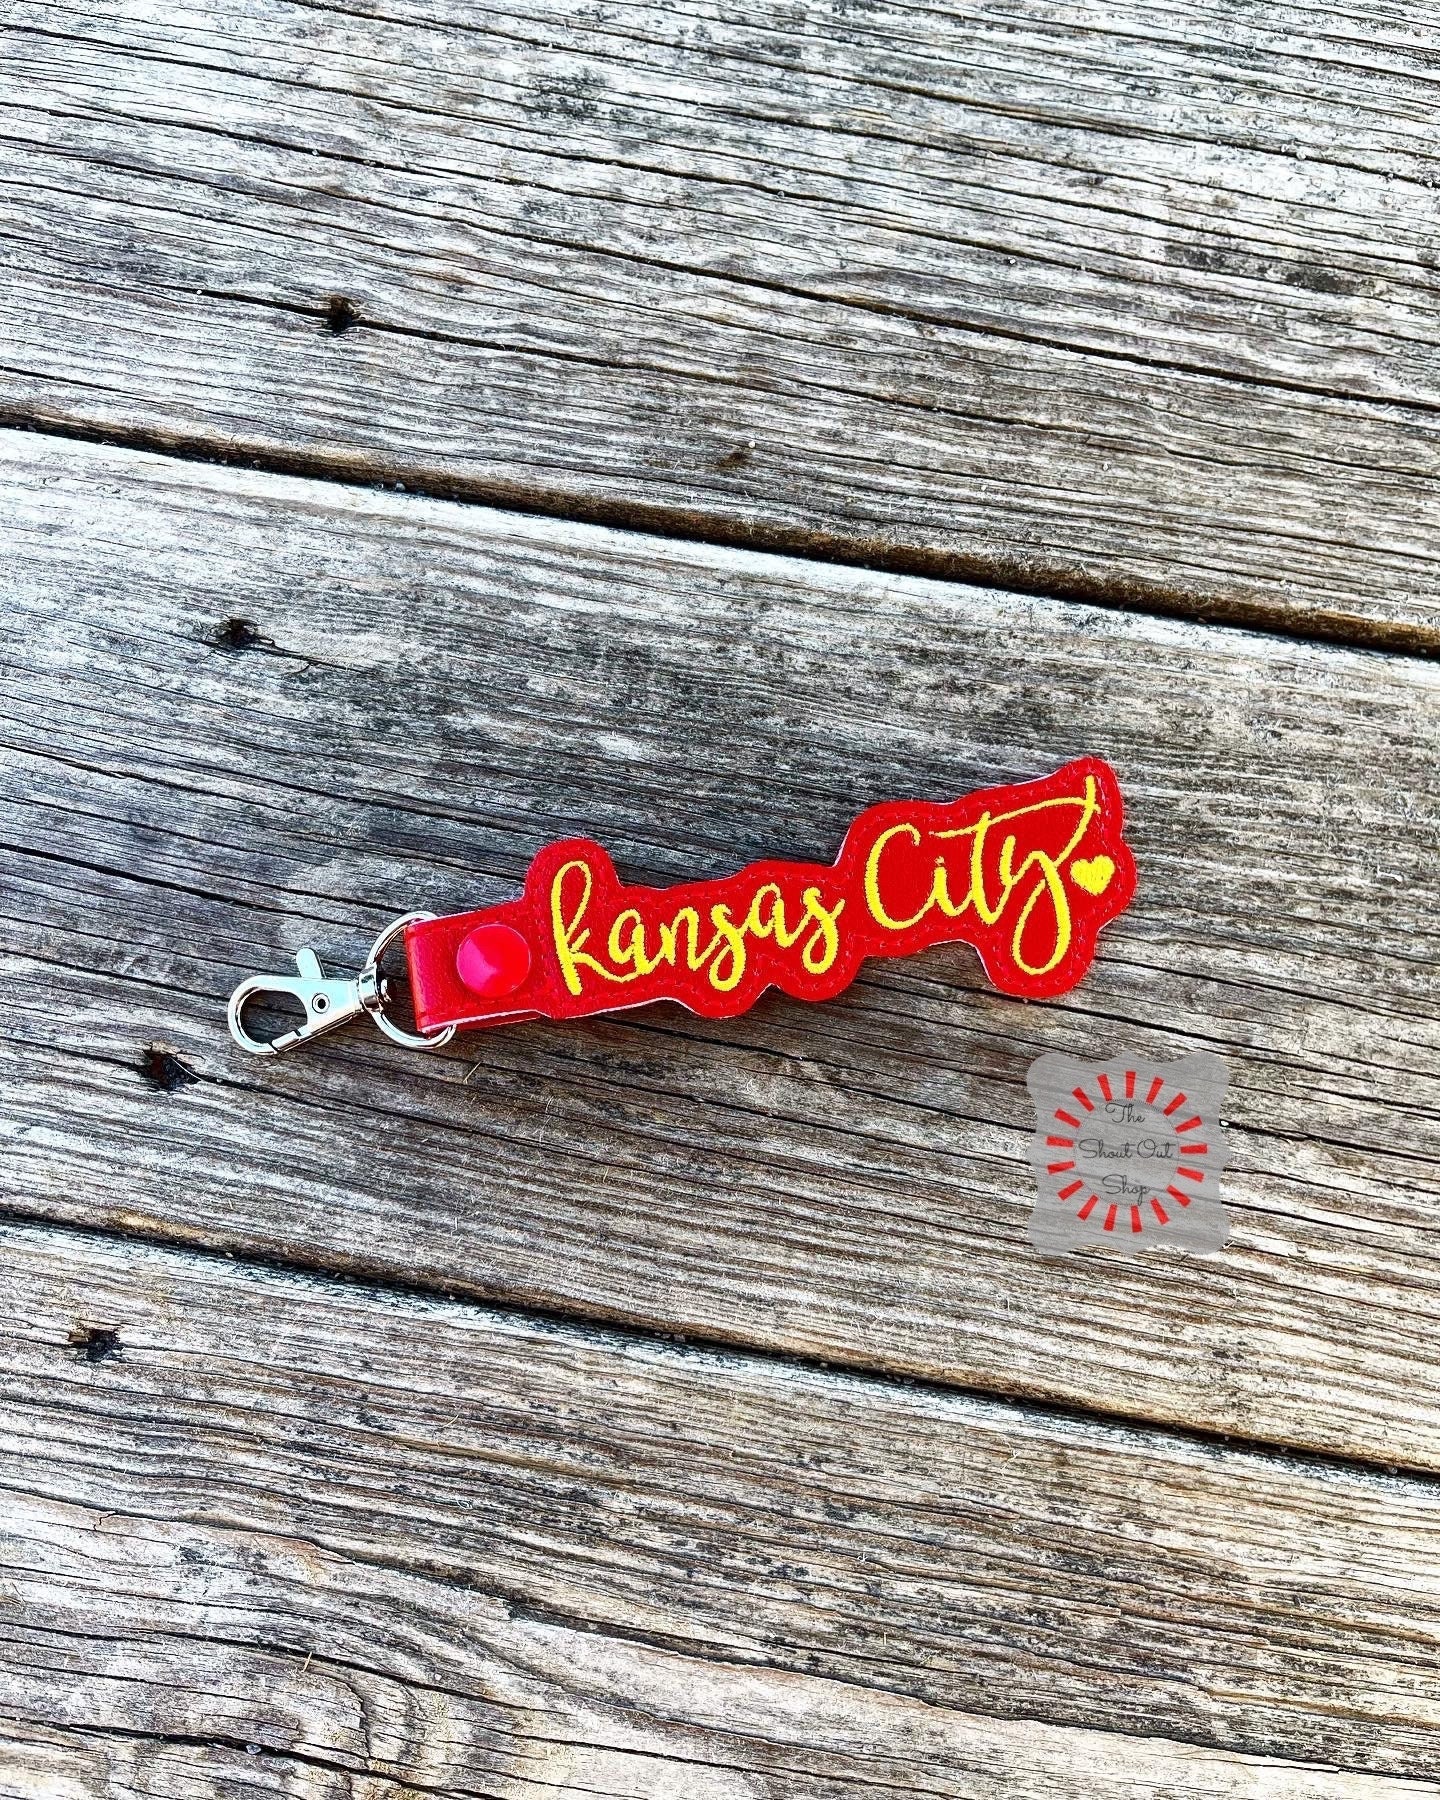 Kansas City Chiefs Lanyard Keychain Black Red